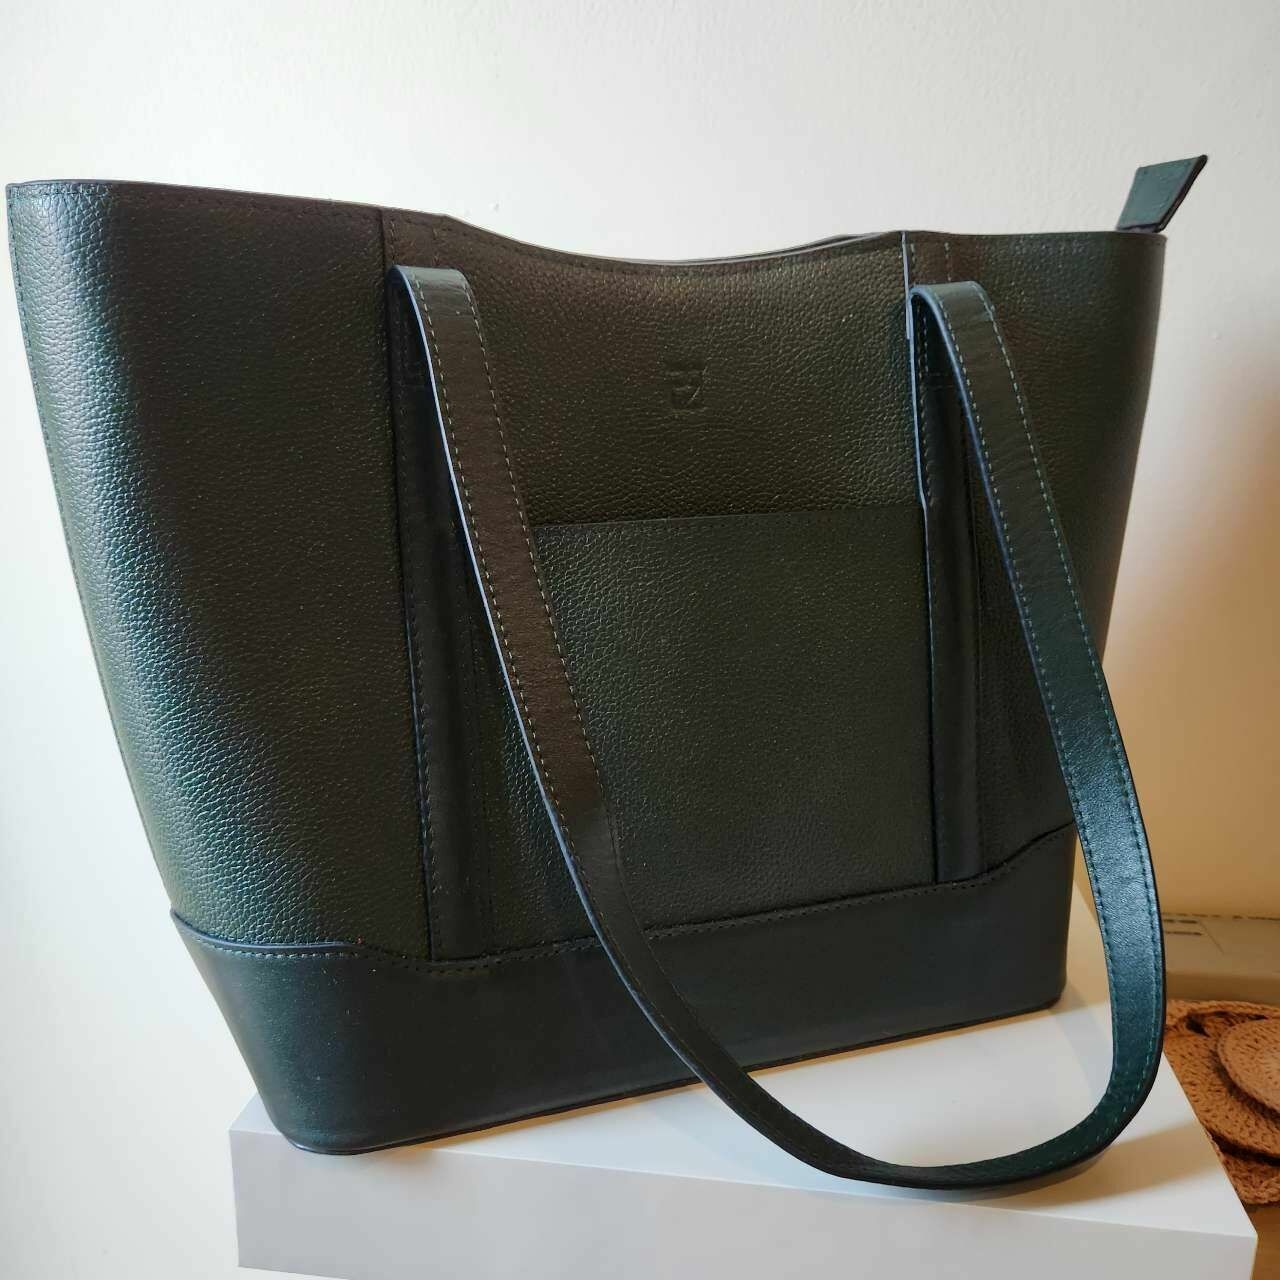 Purotti Laurent Dark Green Basic Tote Bag